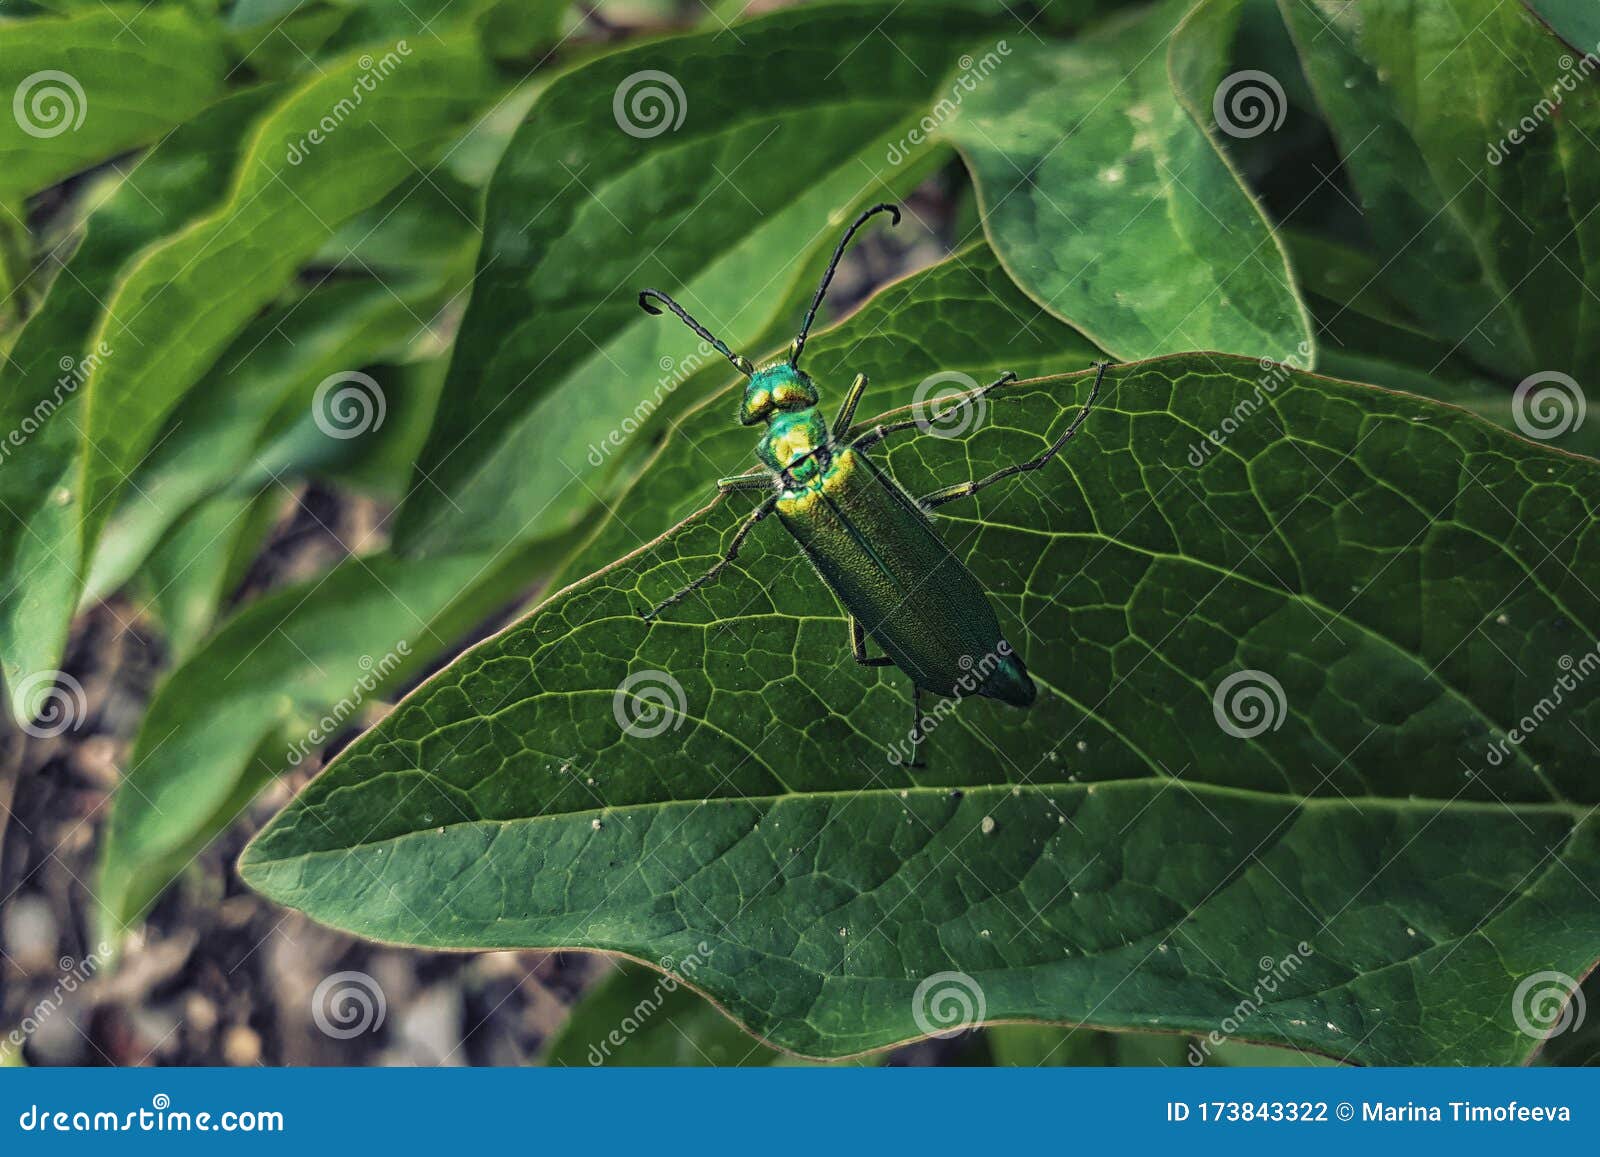 spaniard fly beetle on a green leaf.